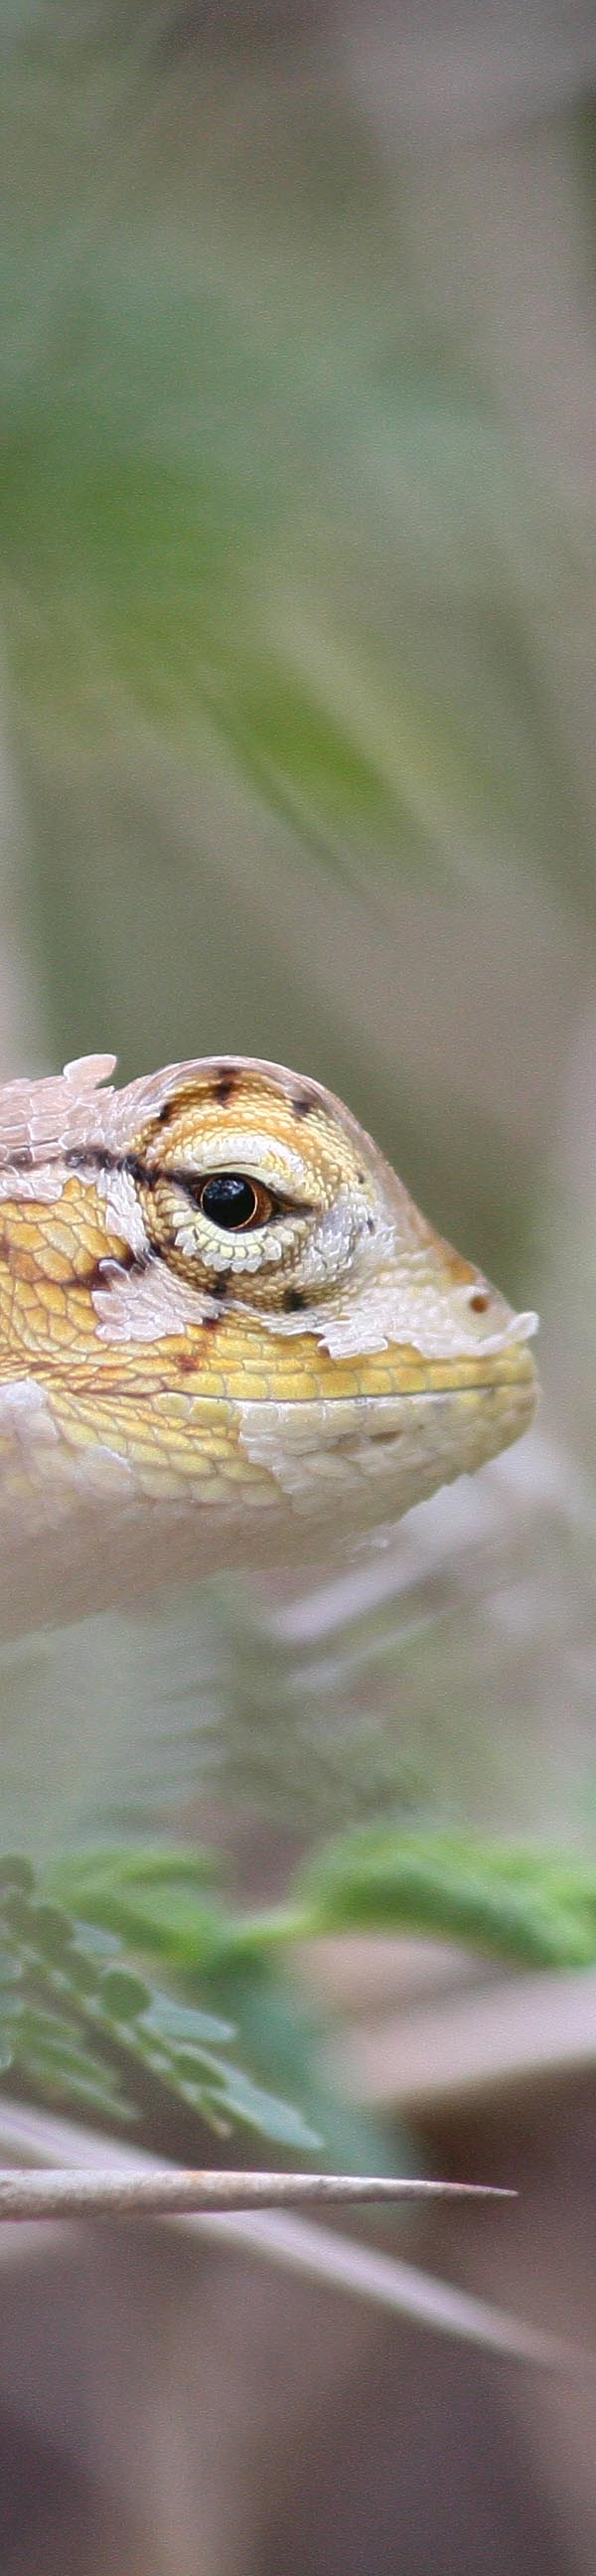 Face of a garden lizard